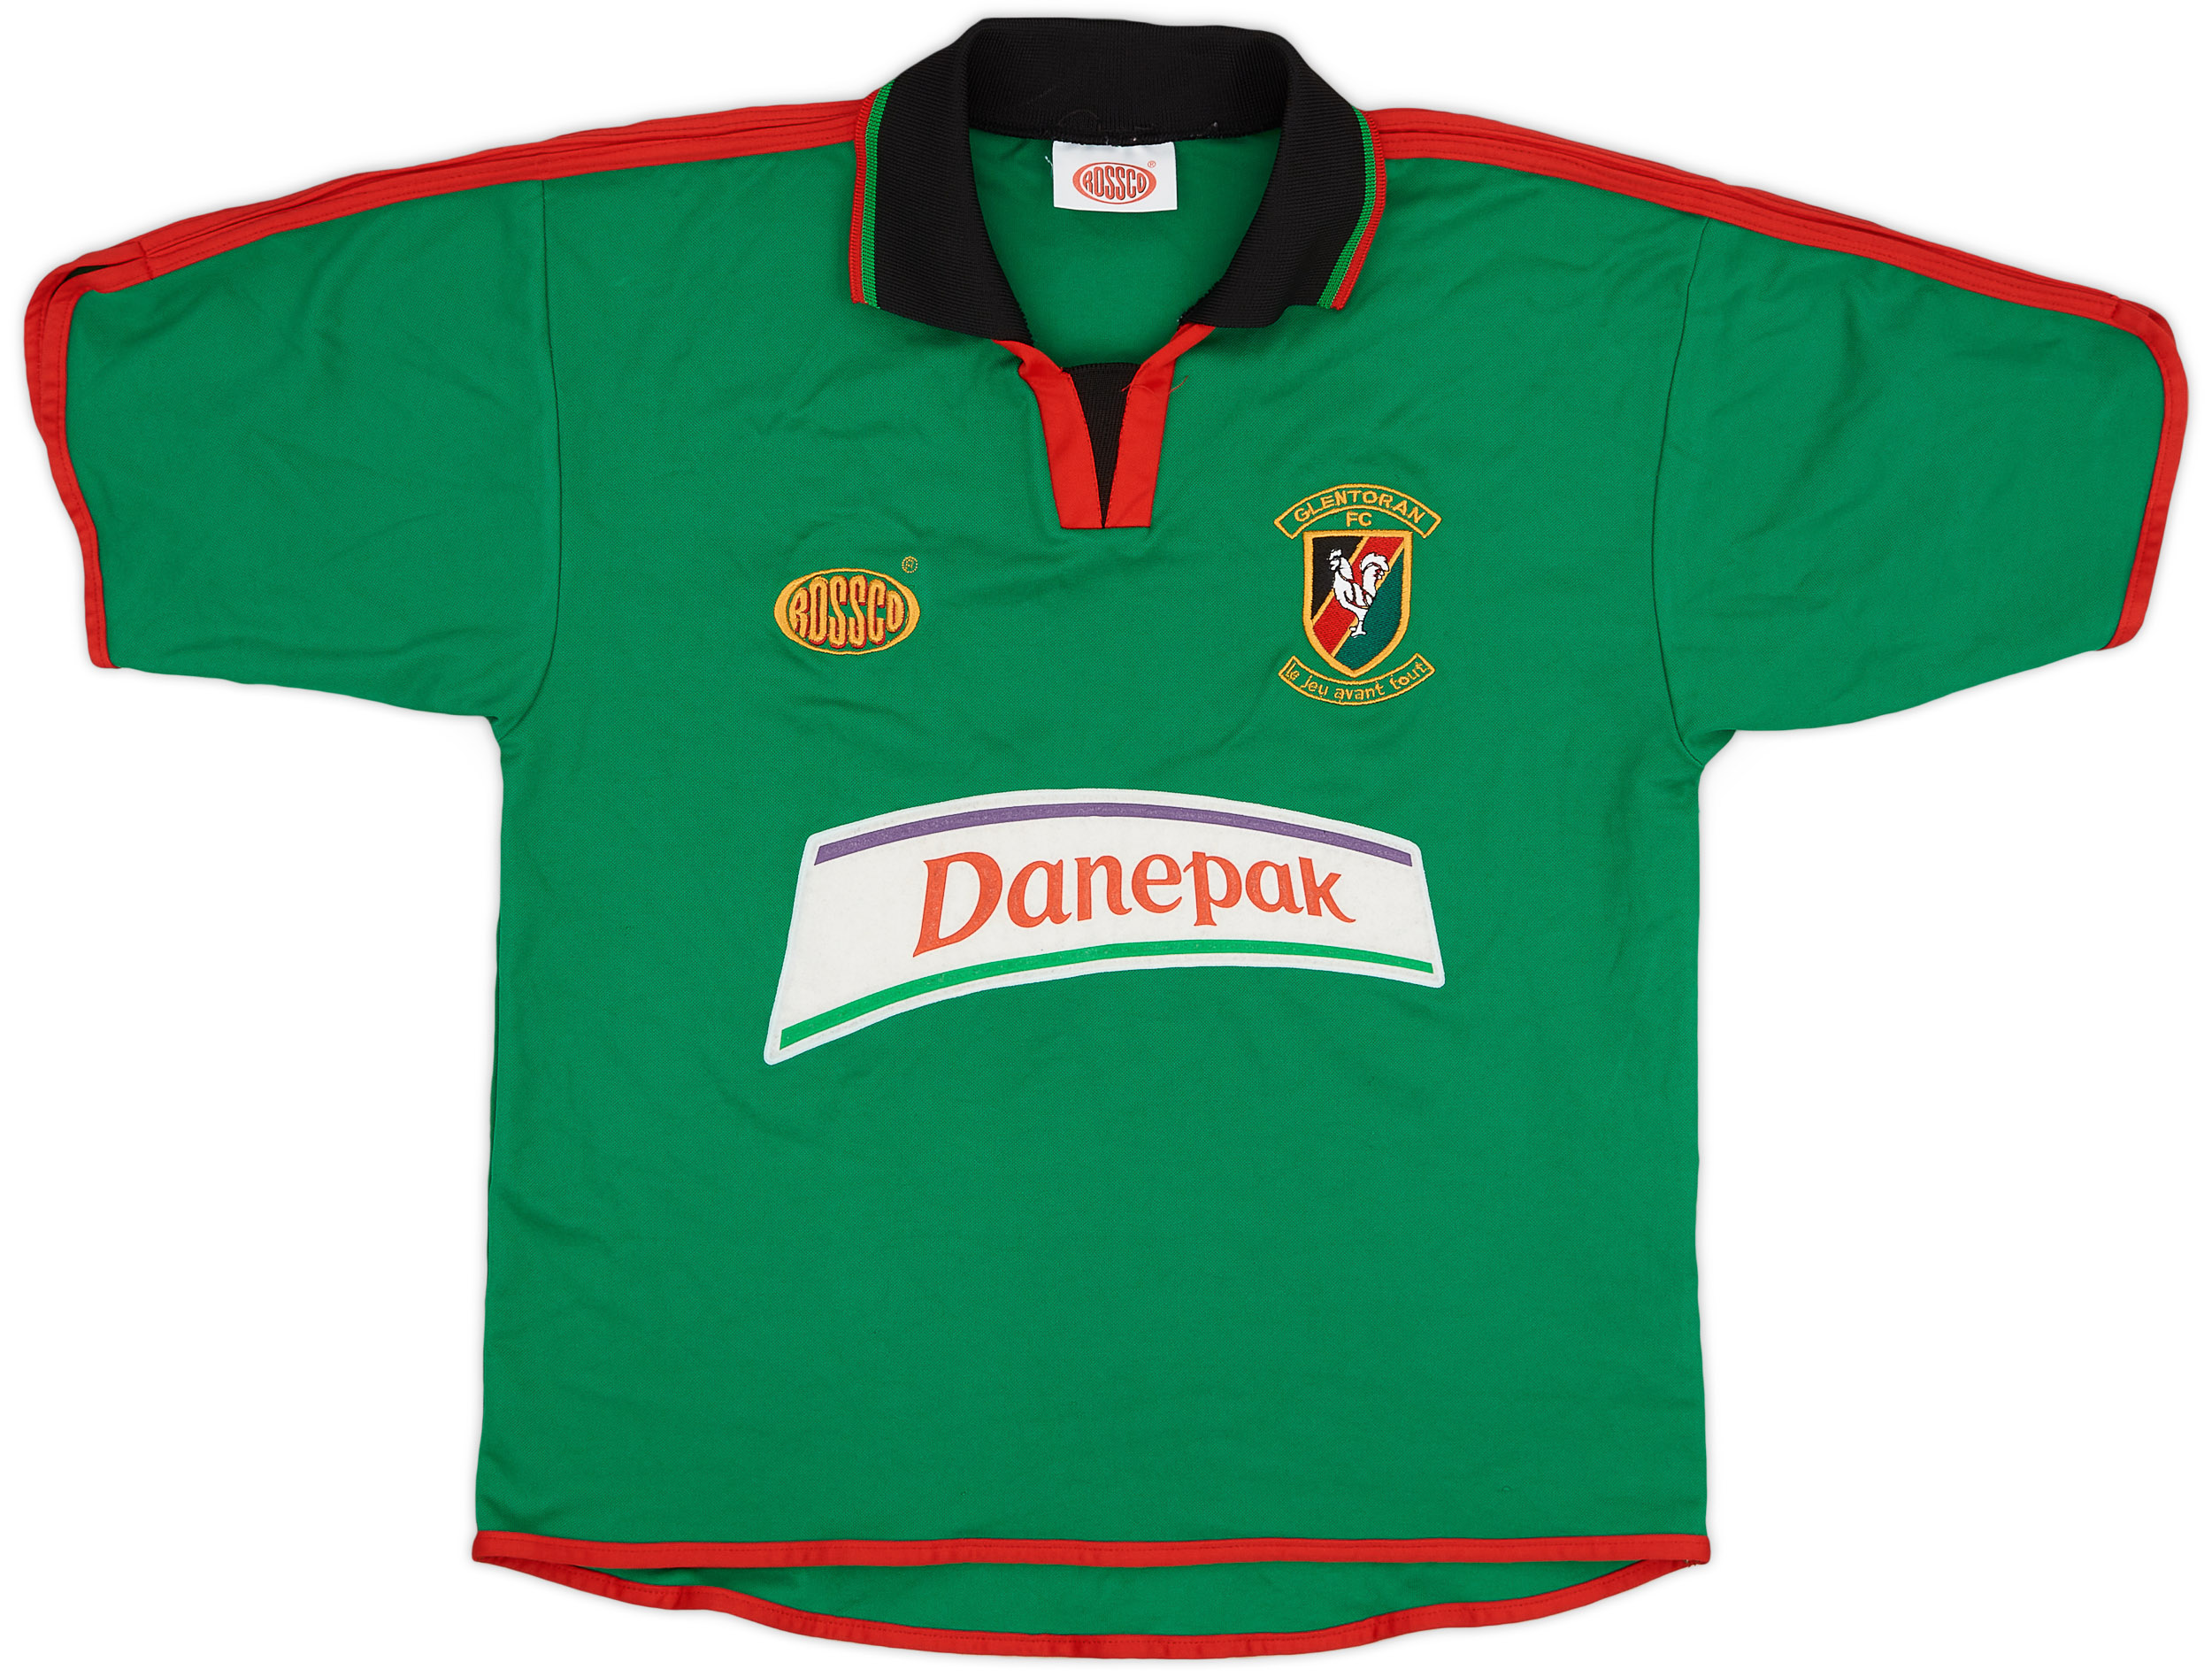 2003-04 Glentoran Home Shirt - 8/10 - ()